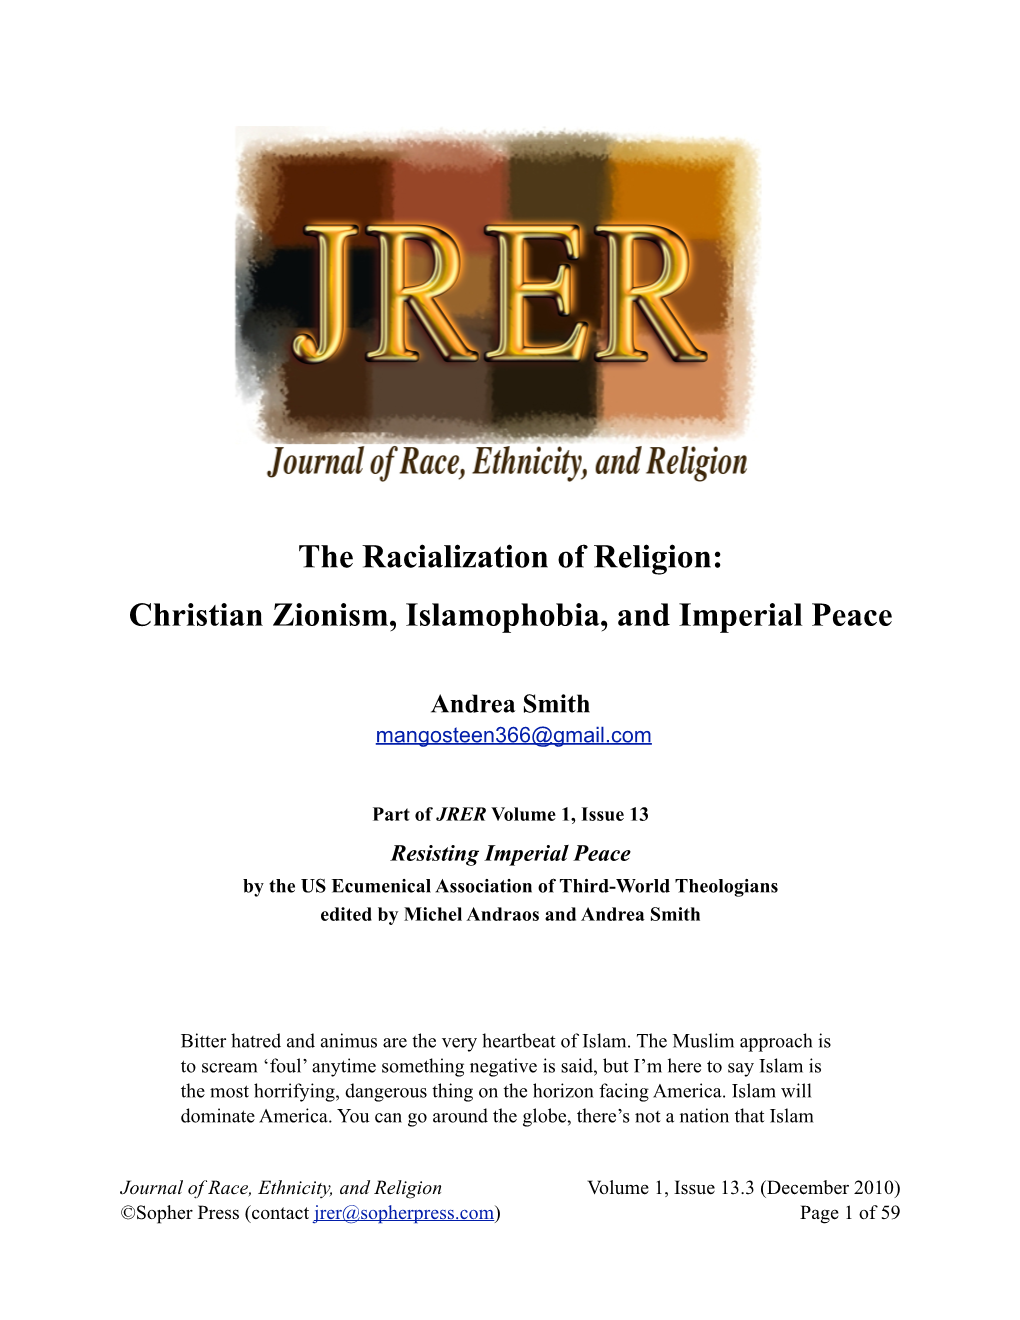 Christian Zionism, Islamophobia, and Imperial Peace